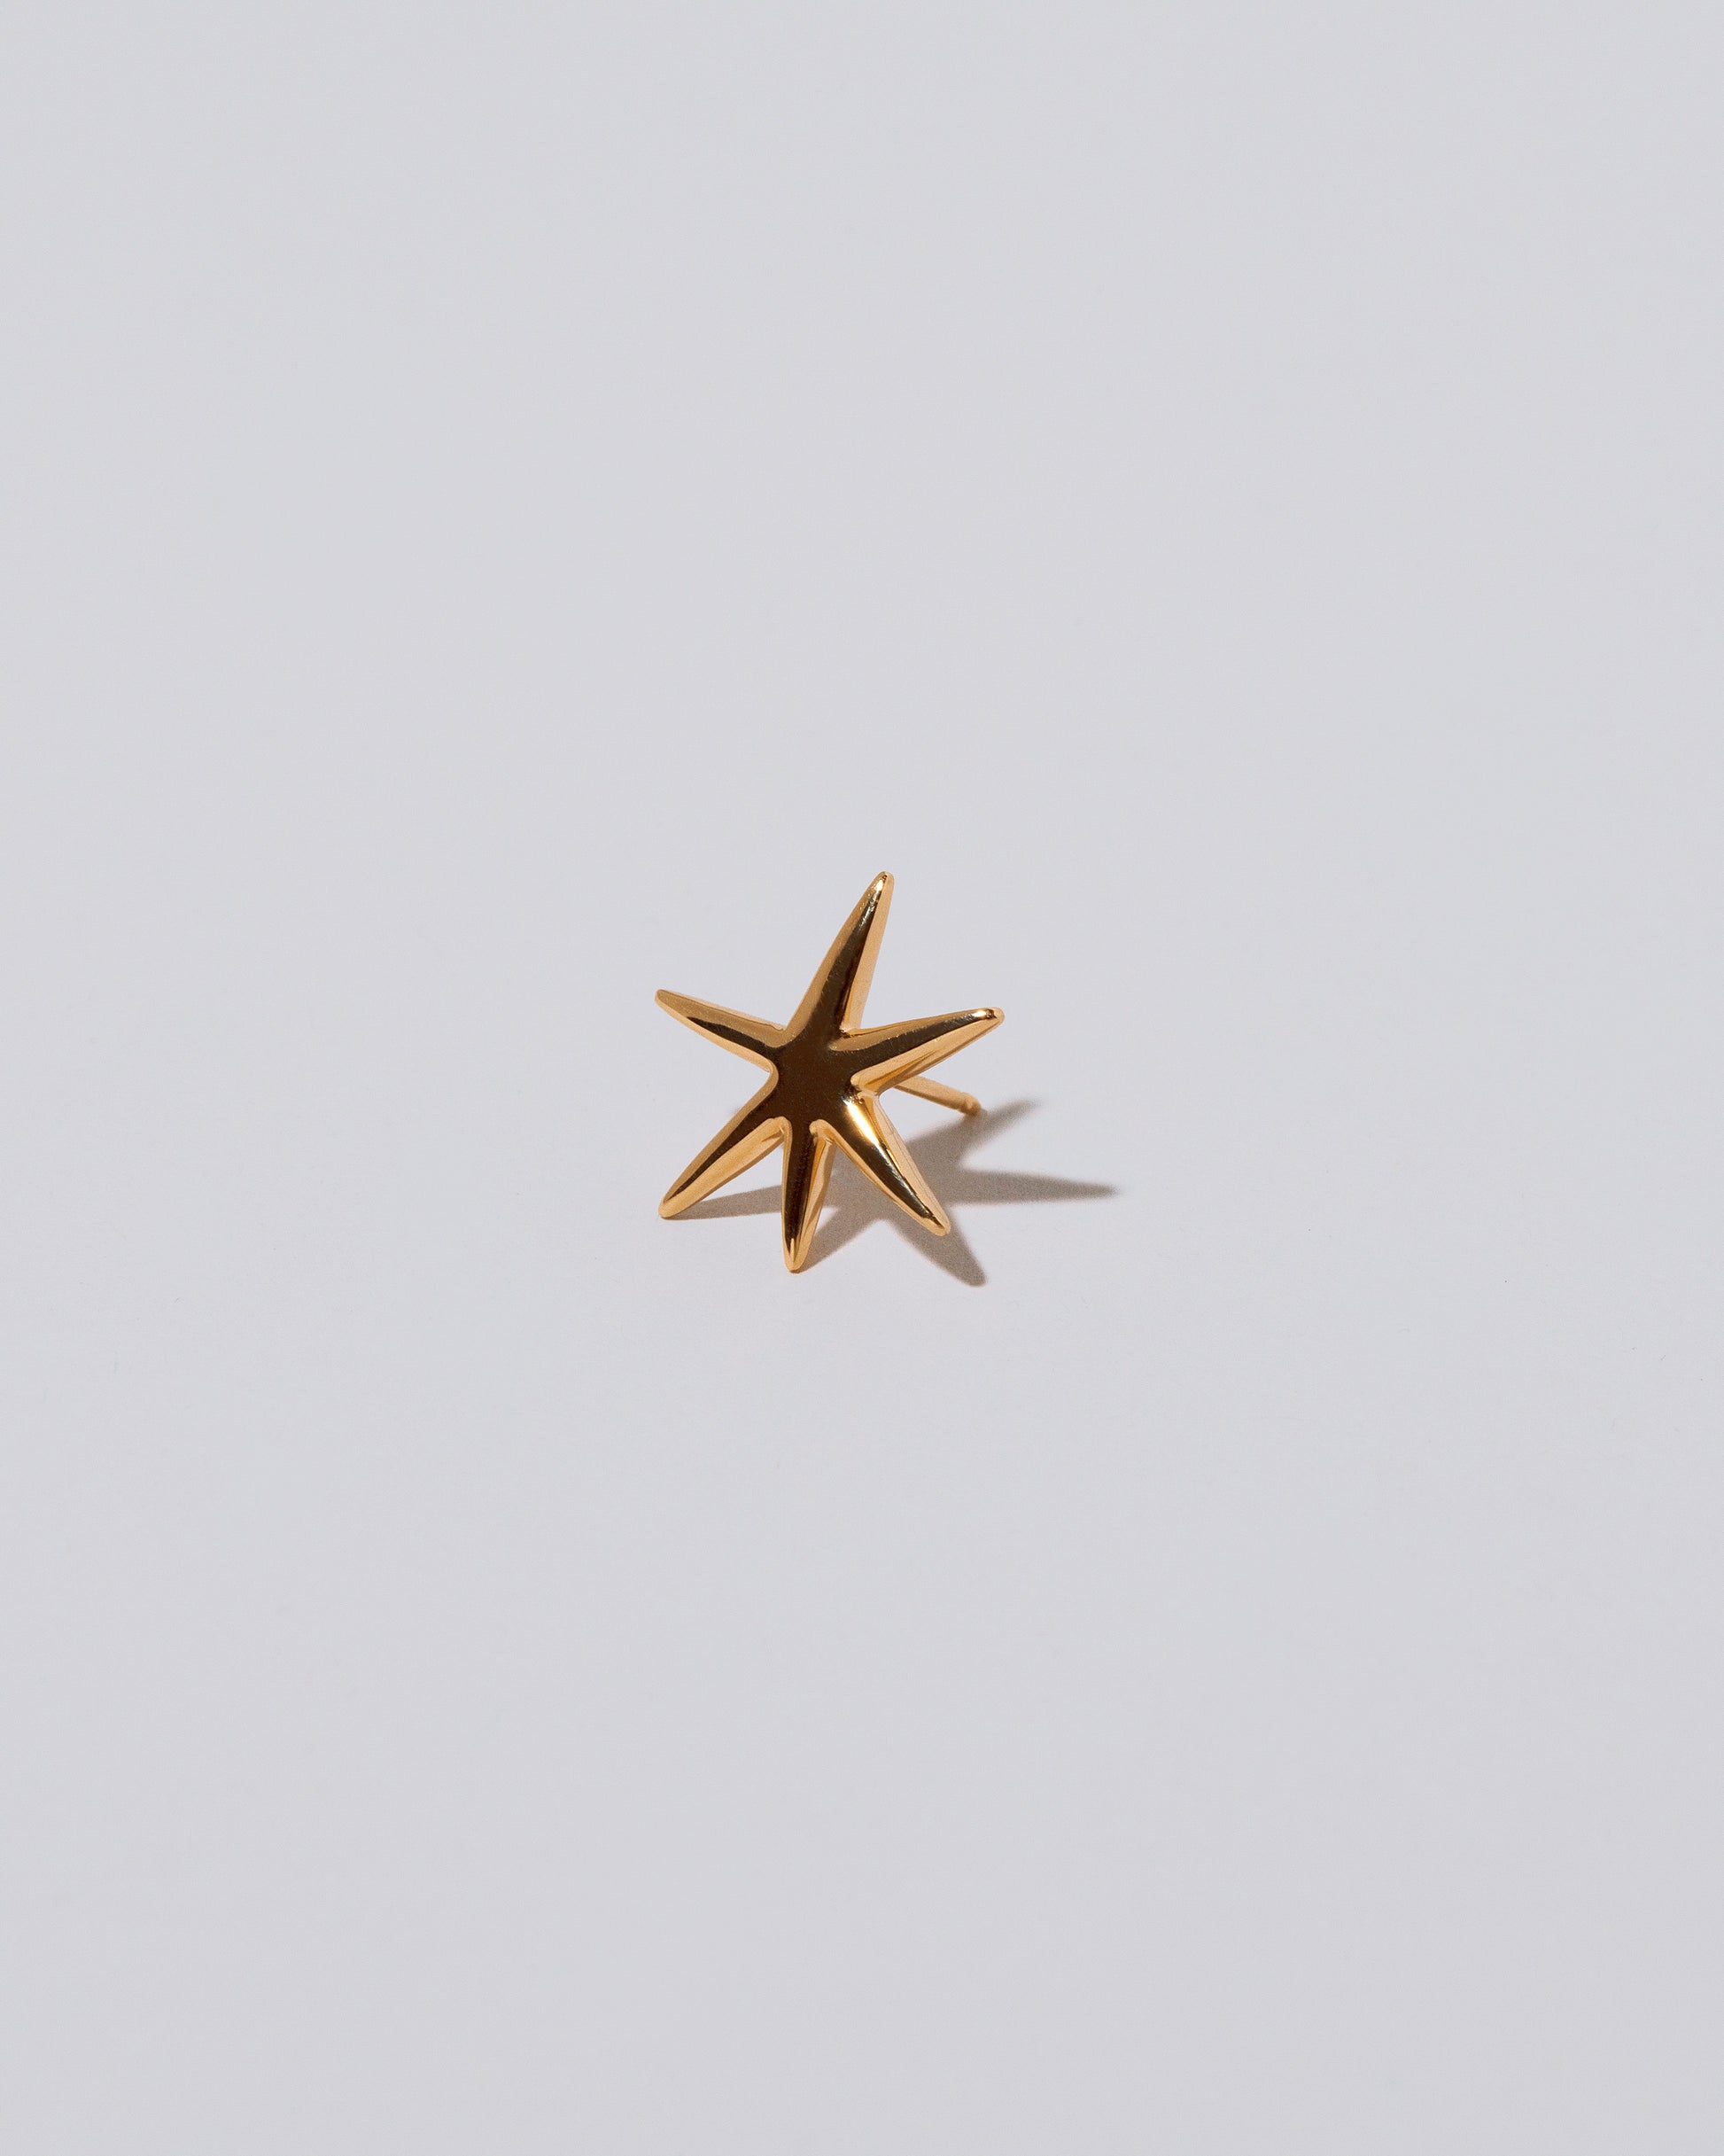 Gold Earrings - Star Post Earrings with 24K Gold Plate